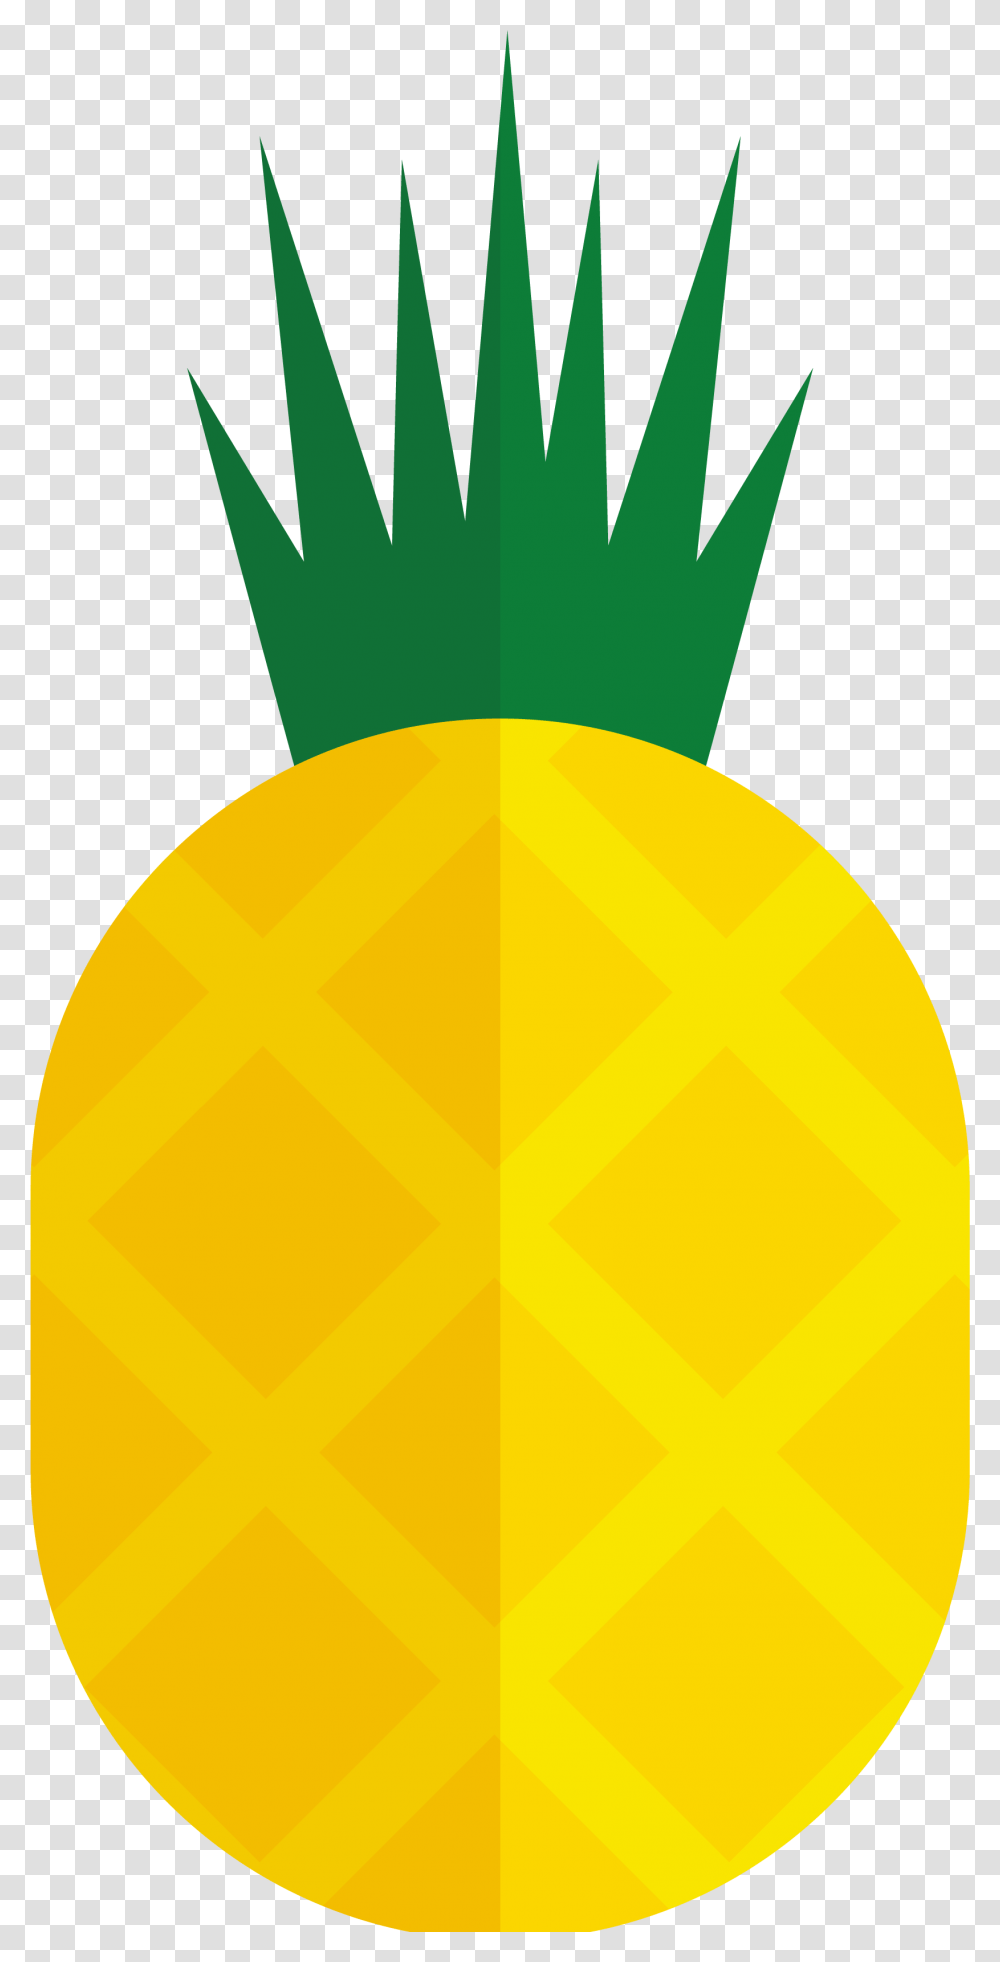 Free Pineapple Download Clip Art Cartoon Pineapple Vector, Plant, Food, Vegetable, Fruit Transparent Png